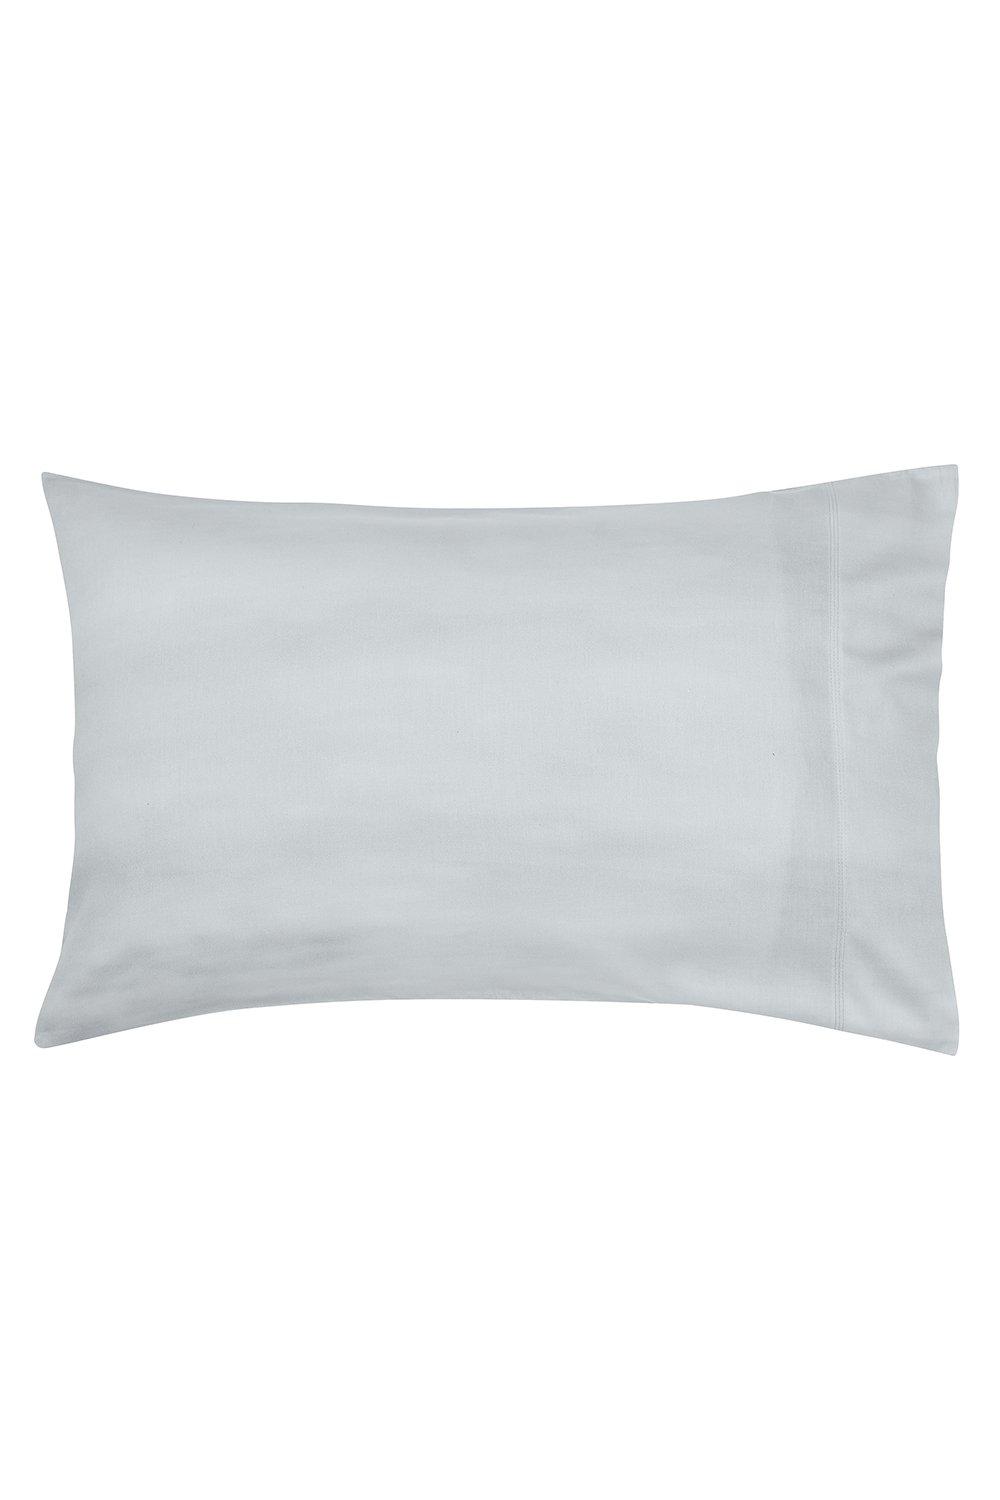 'Silver Lining Cotton Sateen' Standard Pillowcase Pair